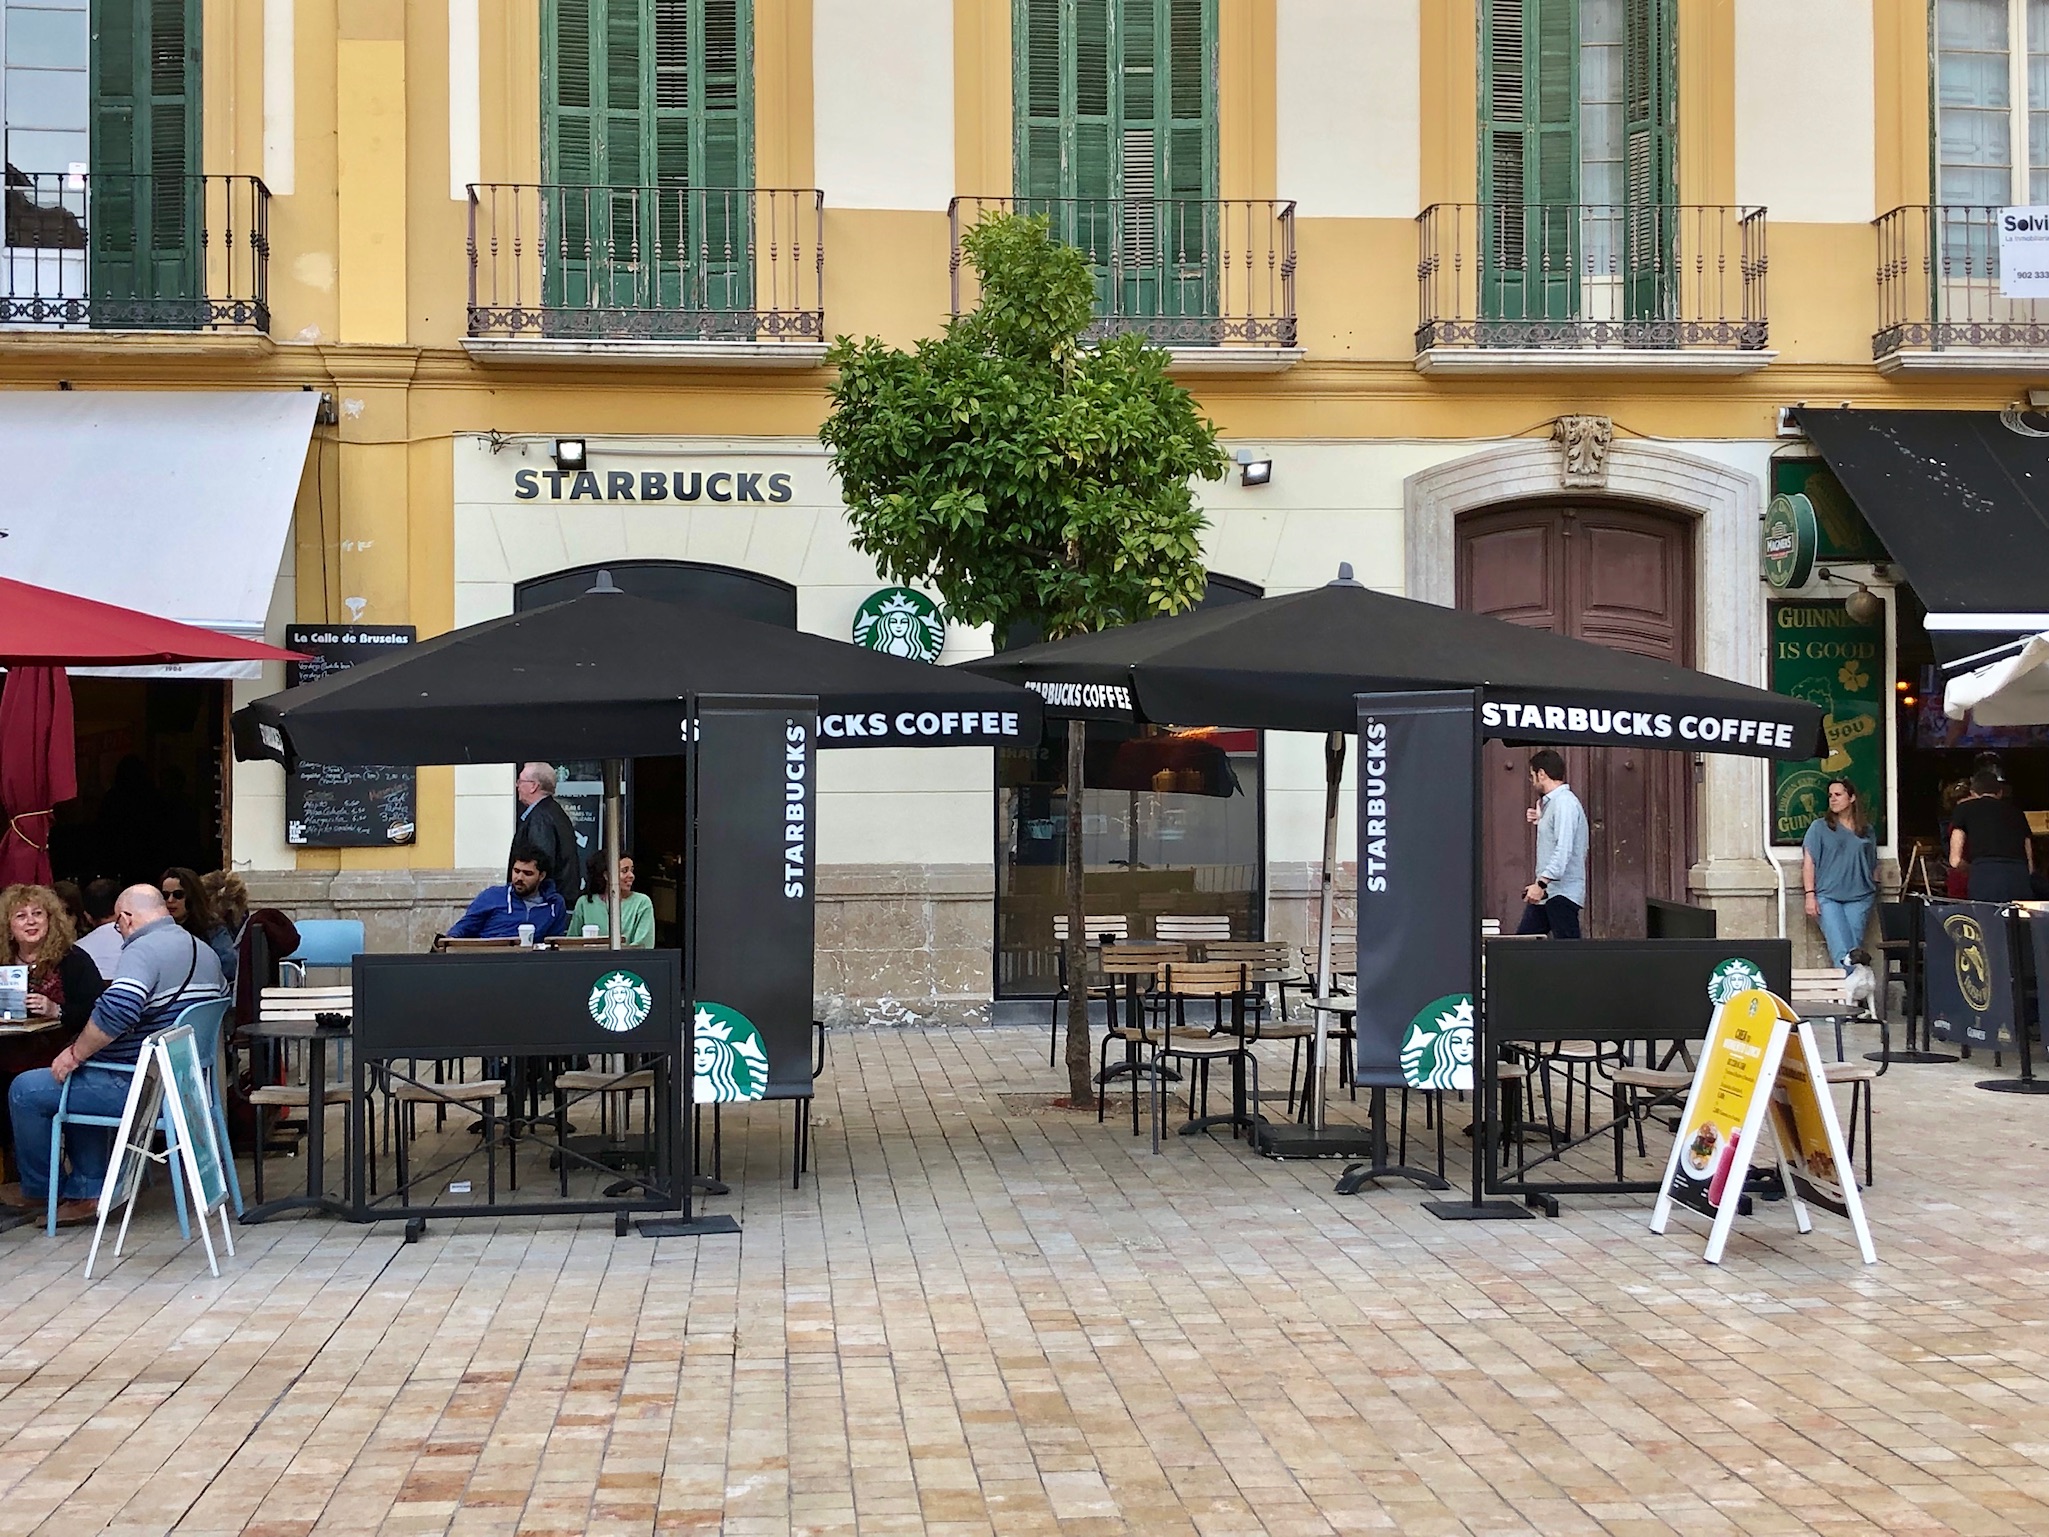 La marca Starbucks abre su tercer local comercial en la capital malagueña